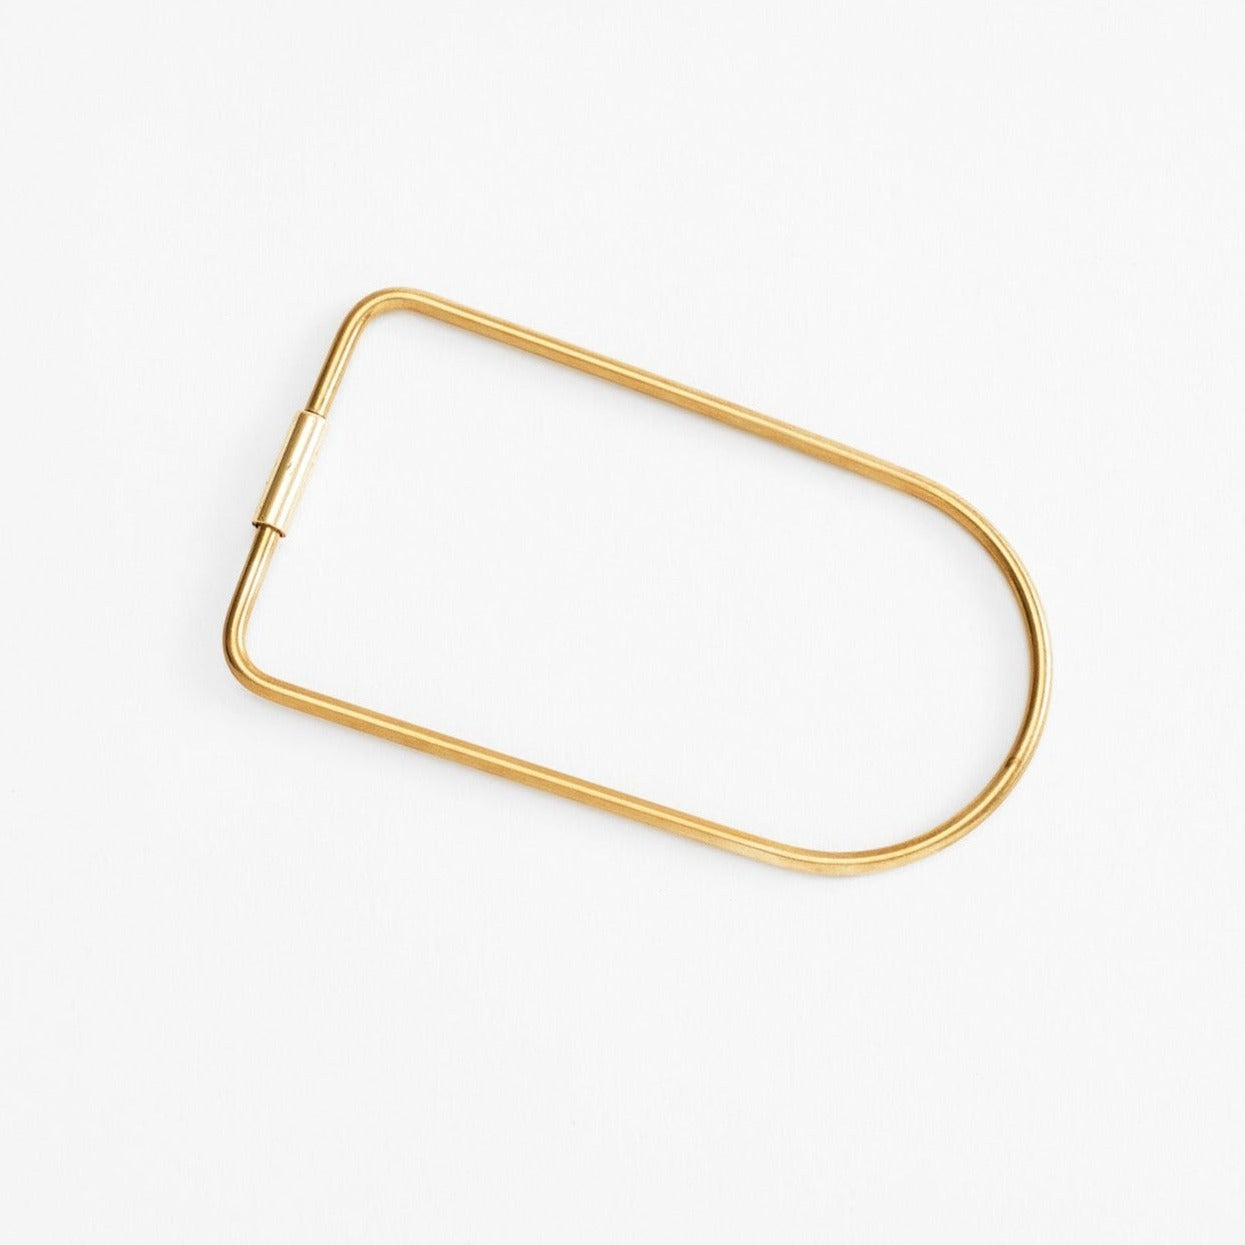 brass key ring contour by Karl Zahn